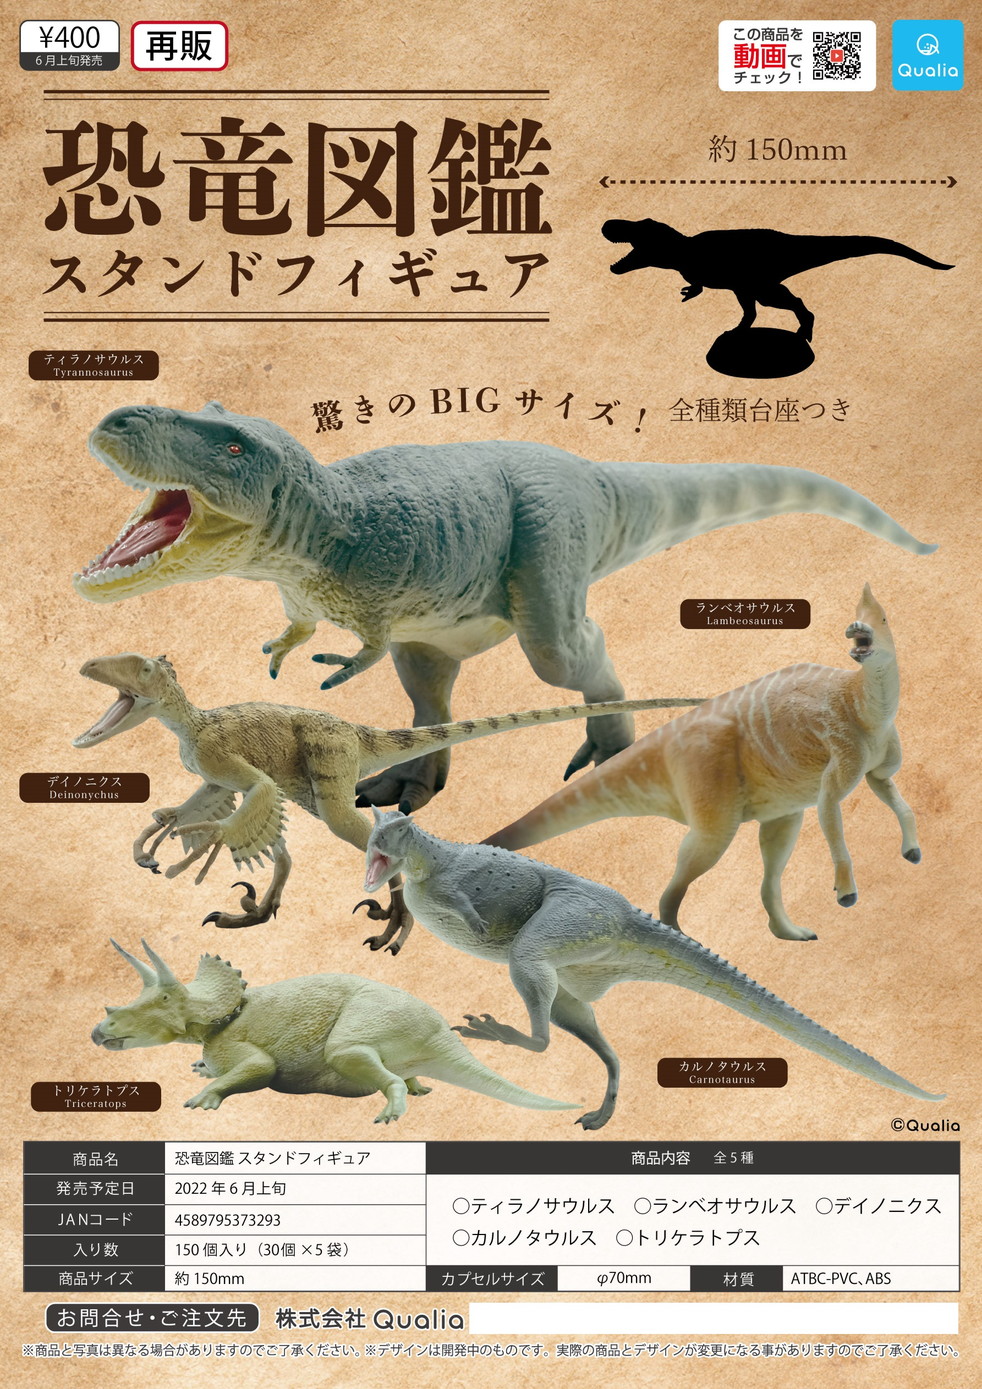 【B】400日元扭蛋 生物模型 恐龙图鉴 全5种 (1袋30个) 373293